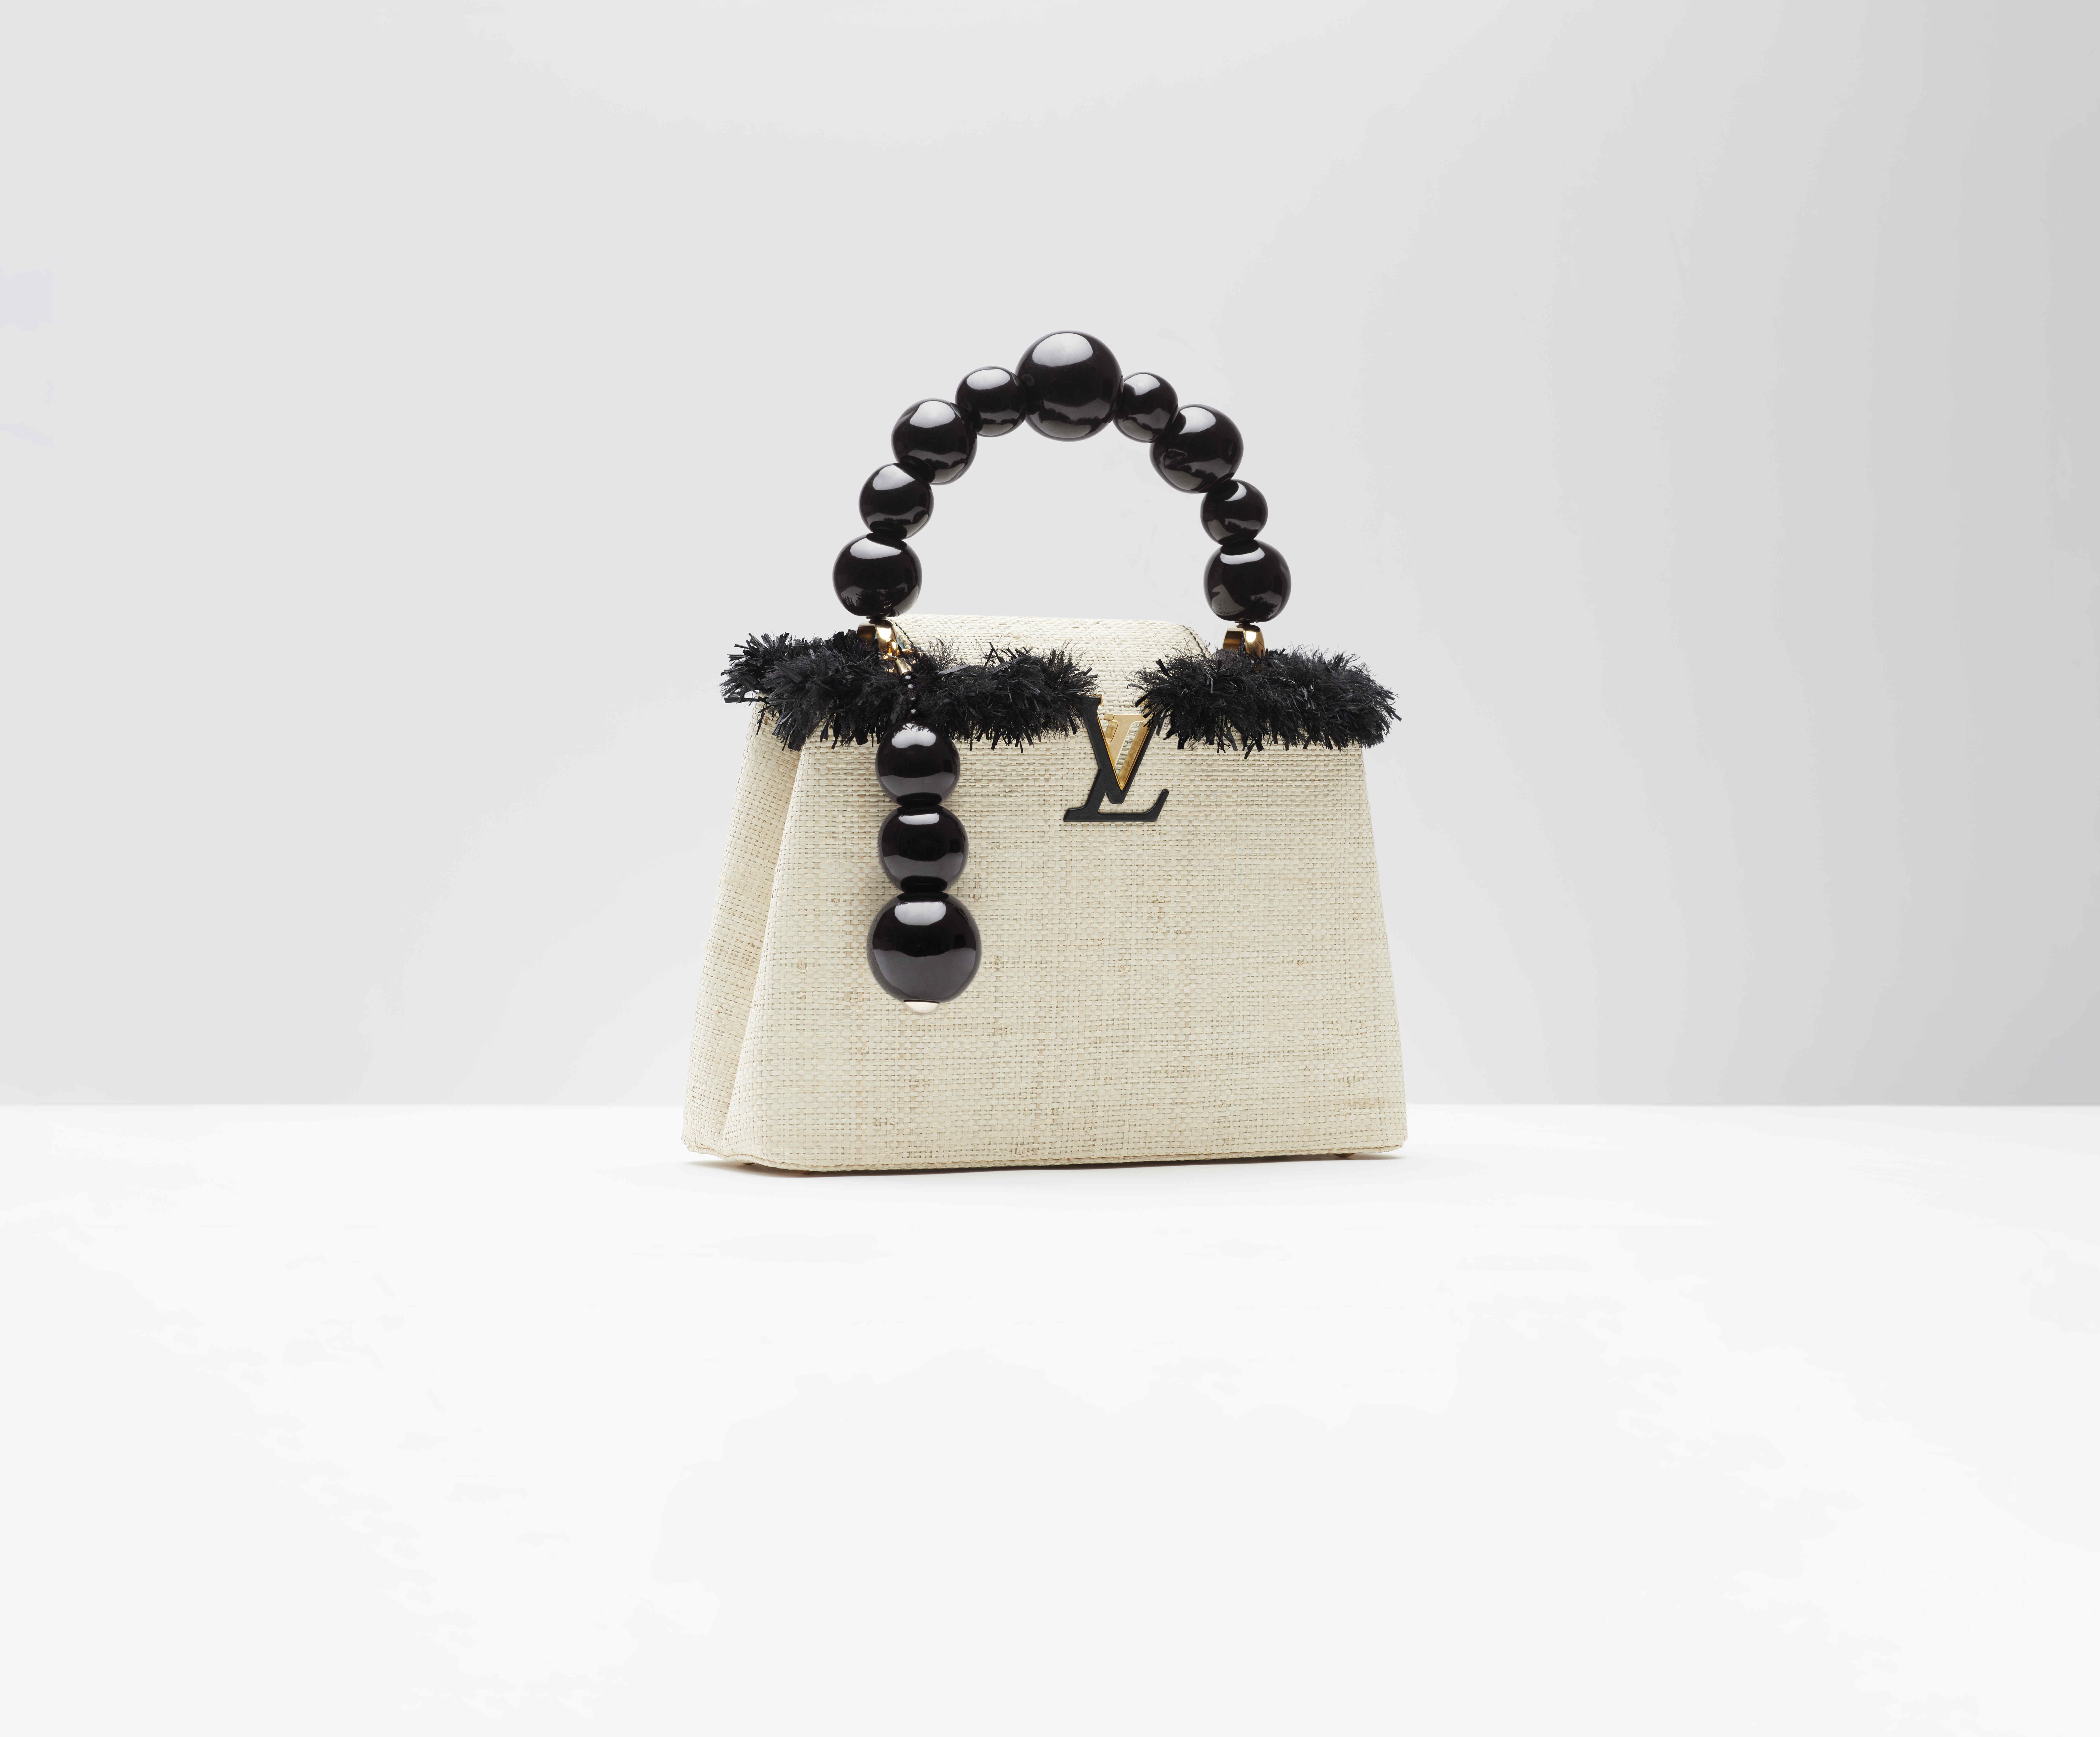 Artist Henry Taylor Reimagines Louis Vuitton's Capucines Bag - MOJEH